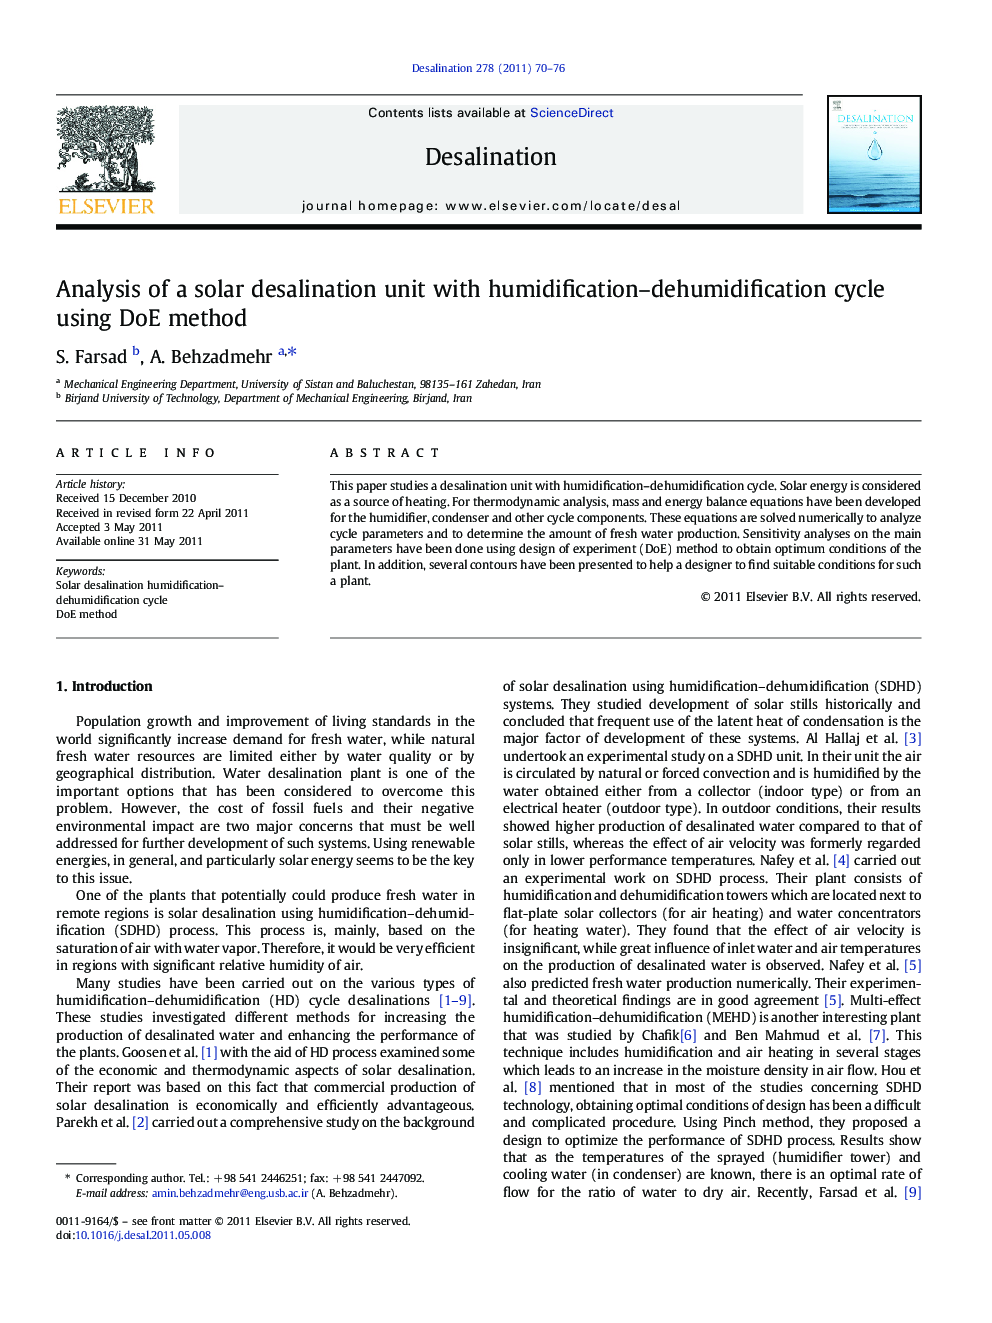 Analysis of a solar desalination unit with humidification-dehumidification cycle using DoE method